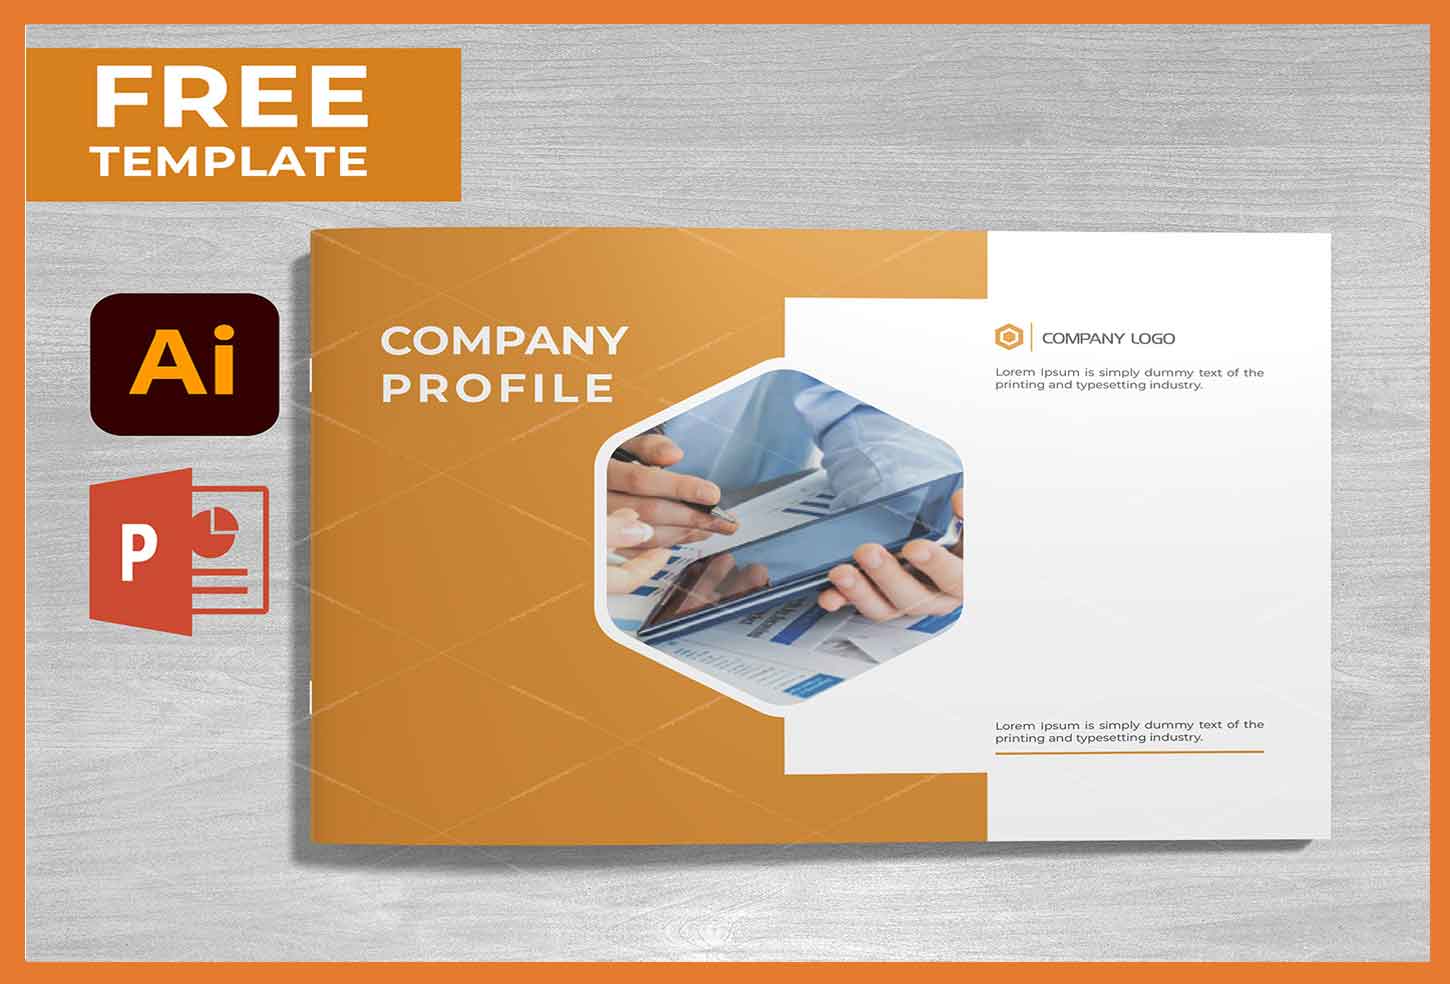 Company Profile Brochure FREE Template Download